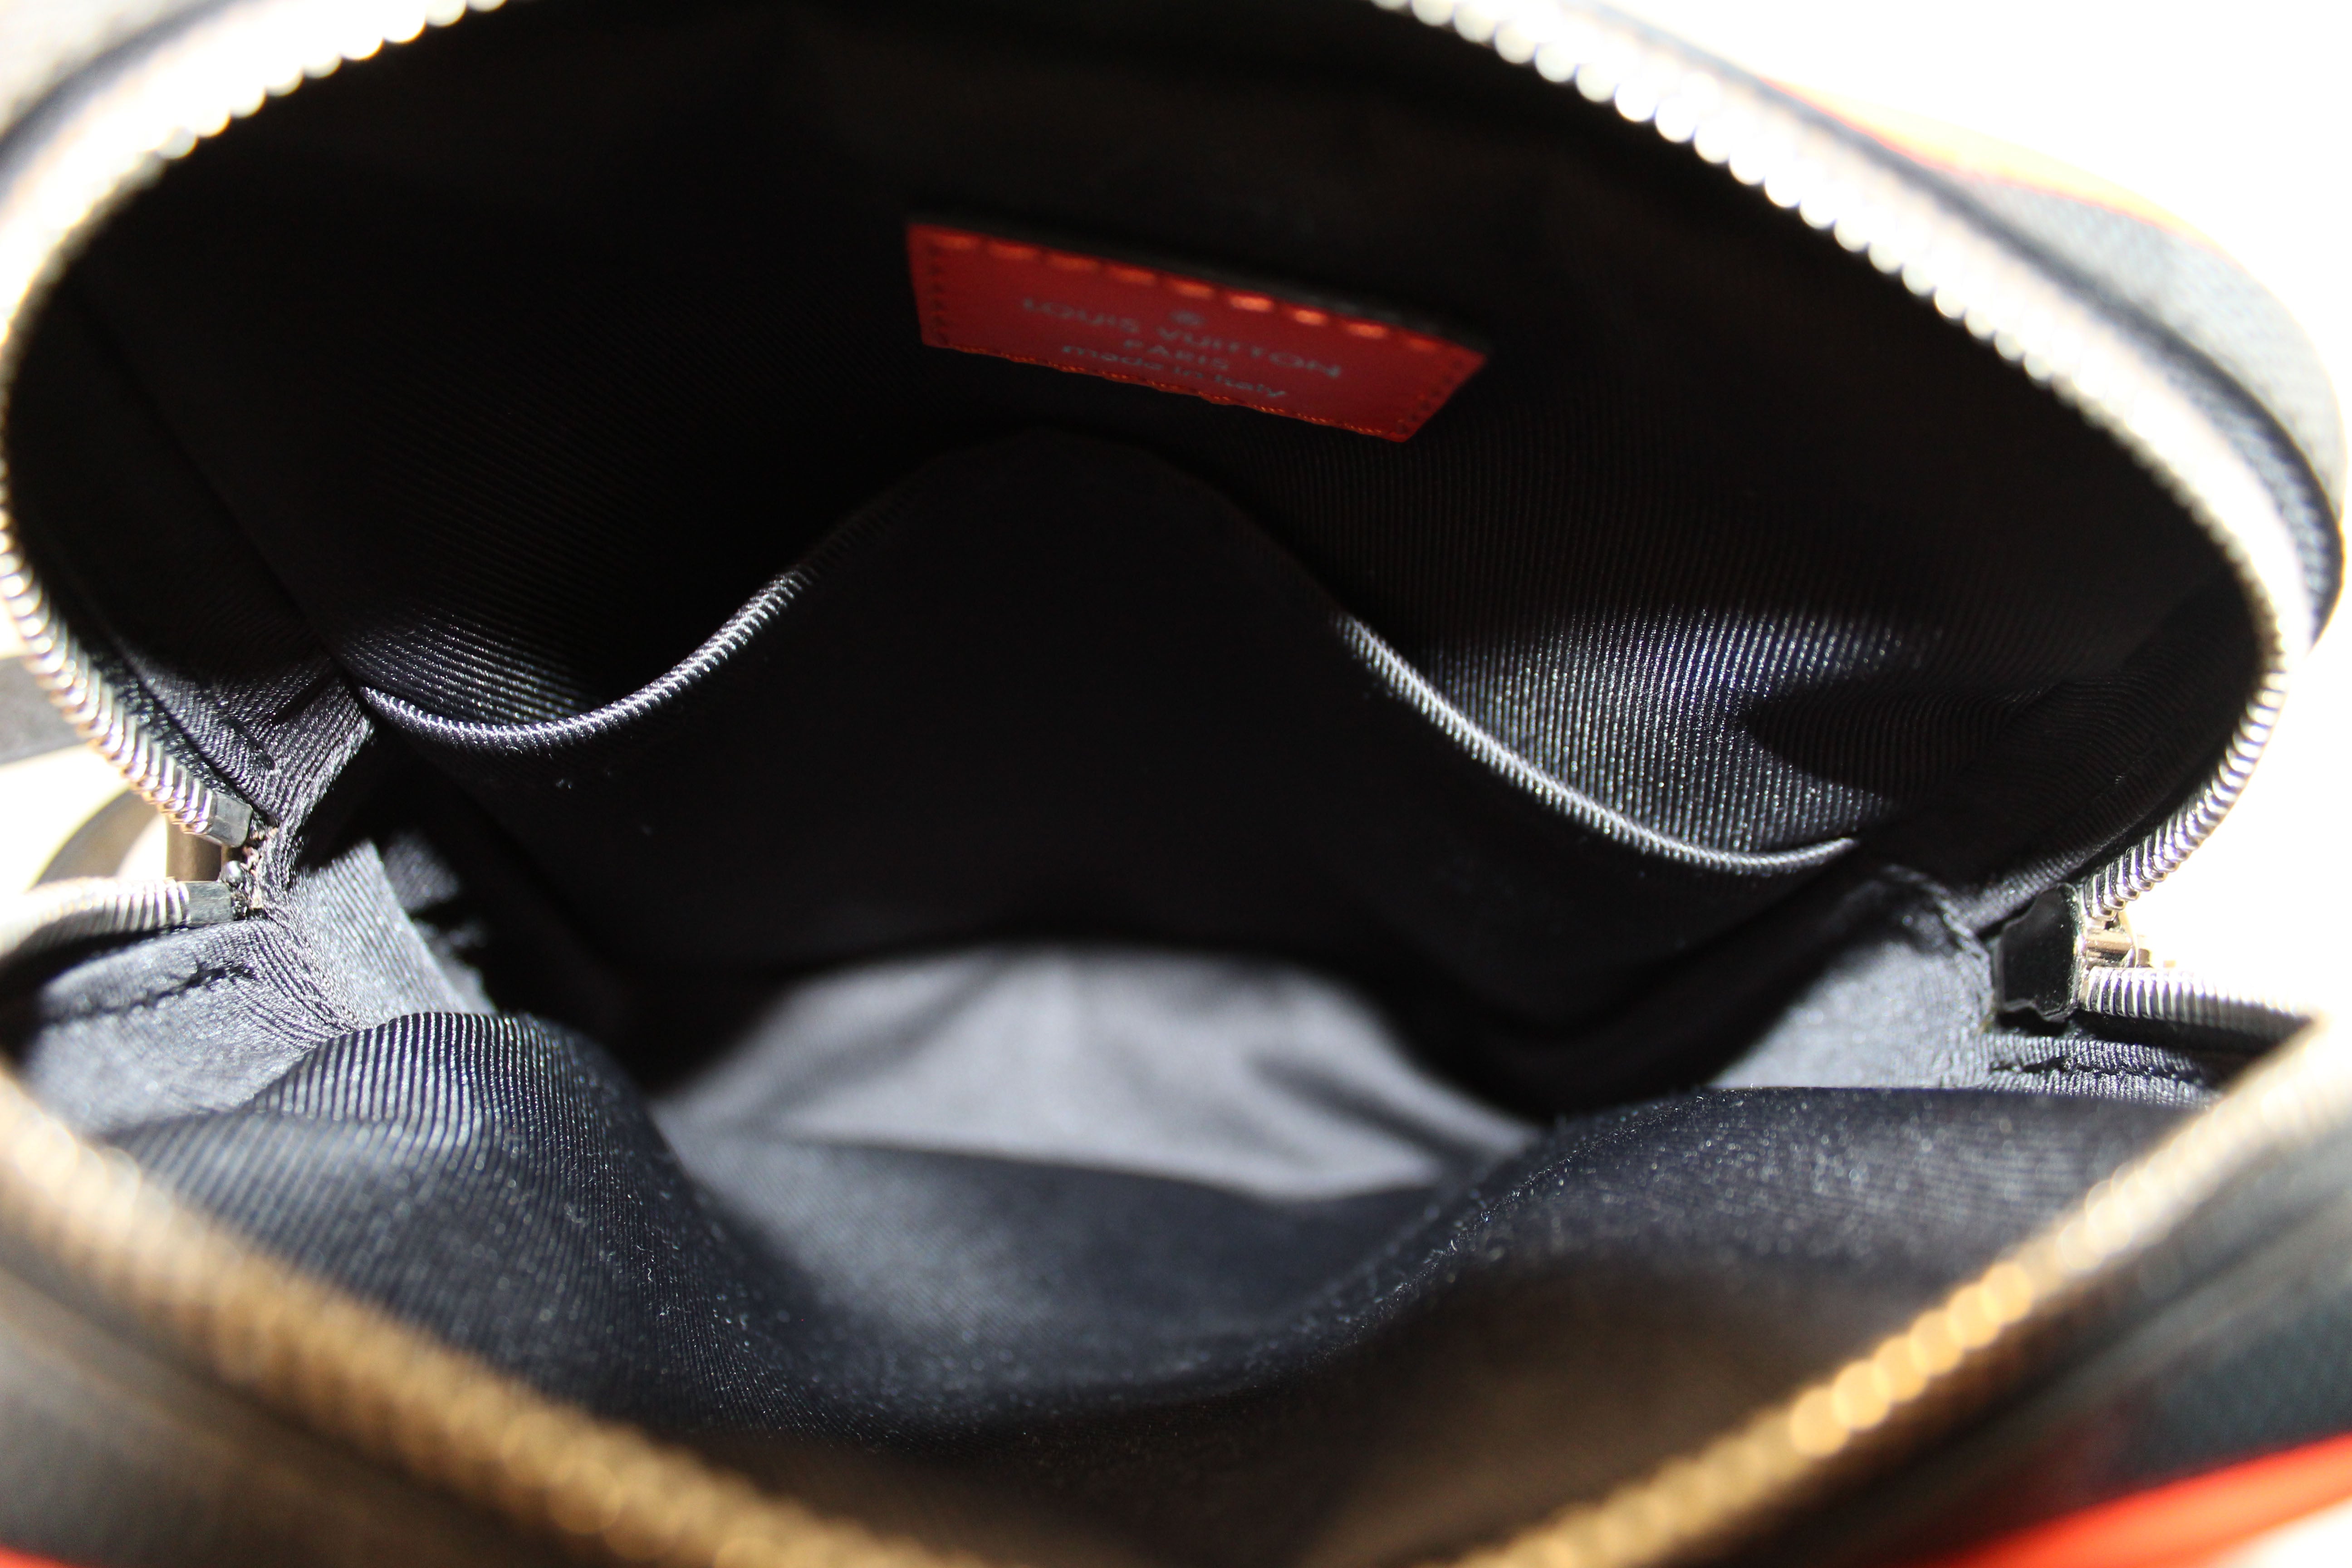 Authentic Louis Vuitton Epi Damier Graphite Danube Slim PM Messenger Bag